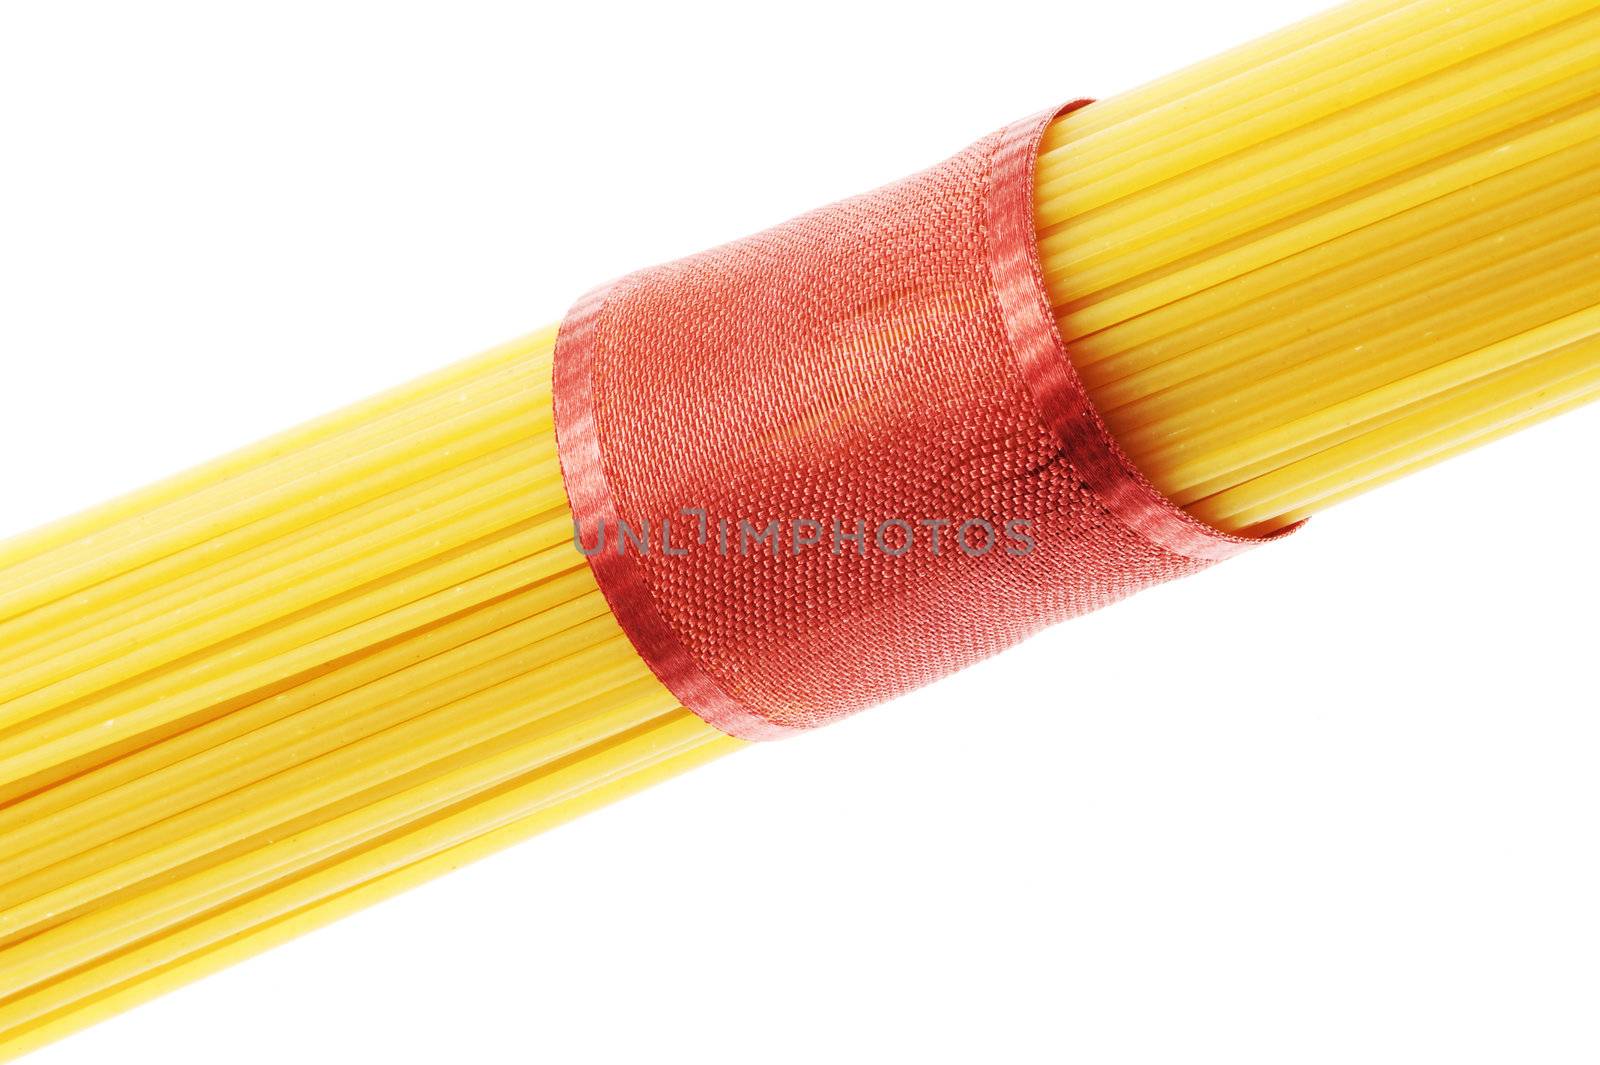 spaghetti, italian pasta: similar picture on my portfolio